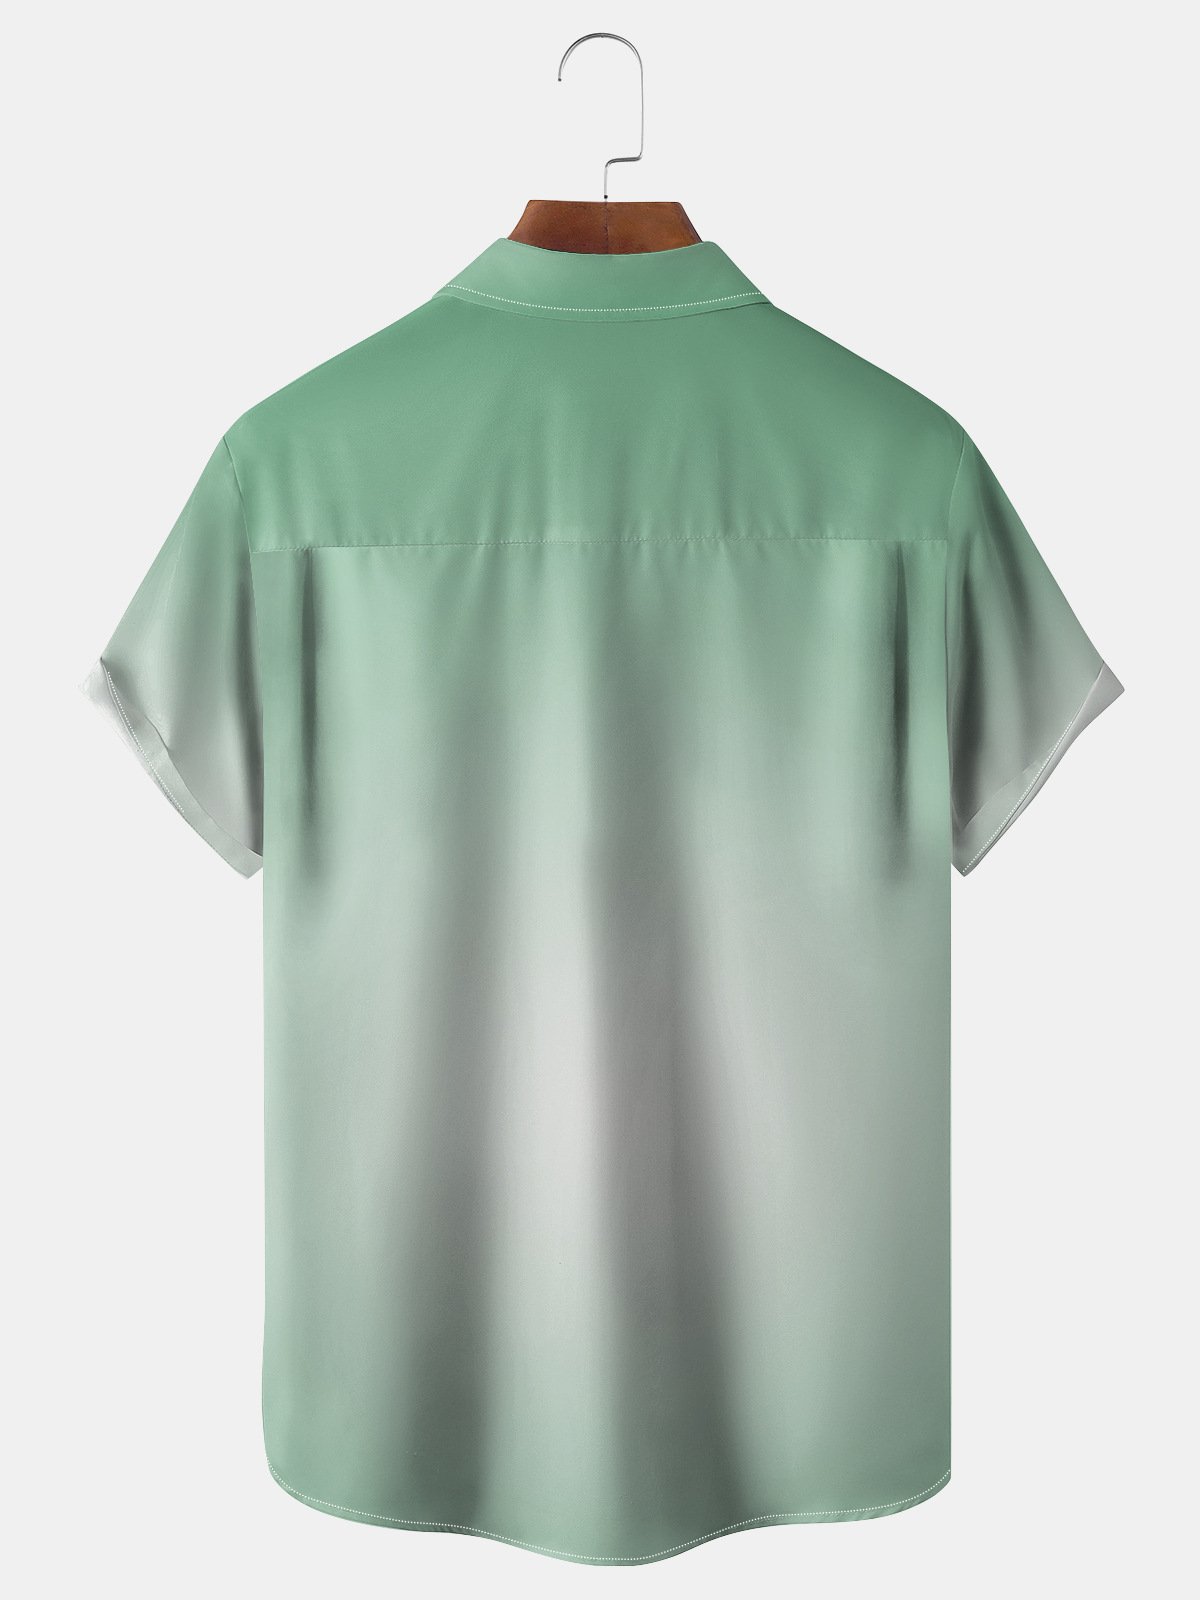 Hardaddy Hawaiian Button Up Shirt for Men Green St. Patrick's Day Lucky Clover Regular Fit Short Sleeve Shirt St Paddy's Day Shirt